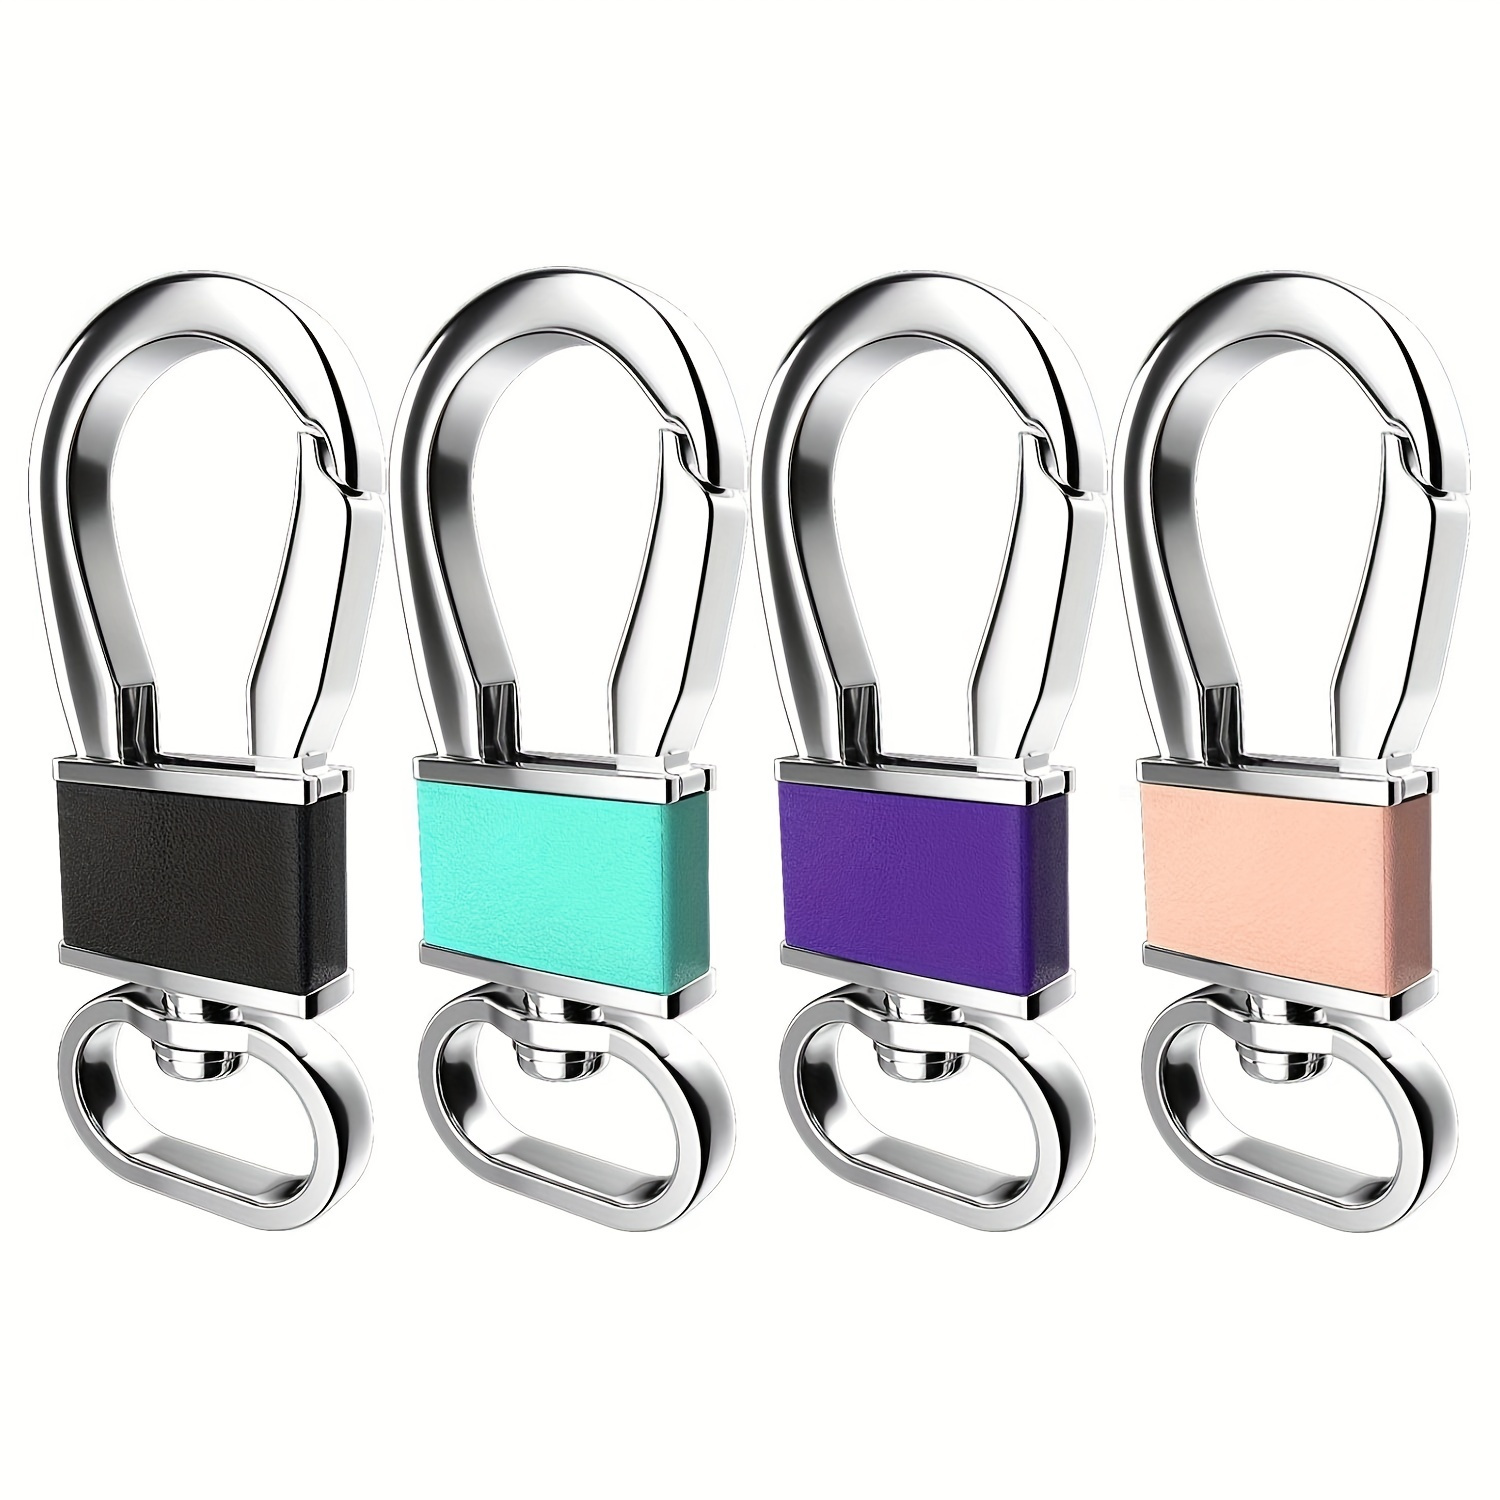 3pcs Keychain Key Ring Carabiner Clip Bag Keyring Chain Fob Holder  Organizer Car